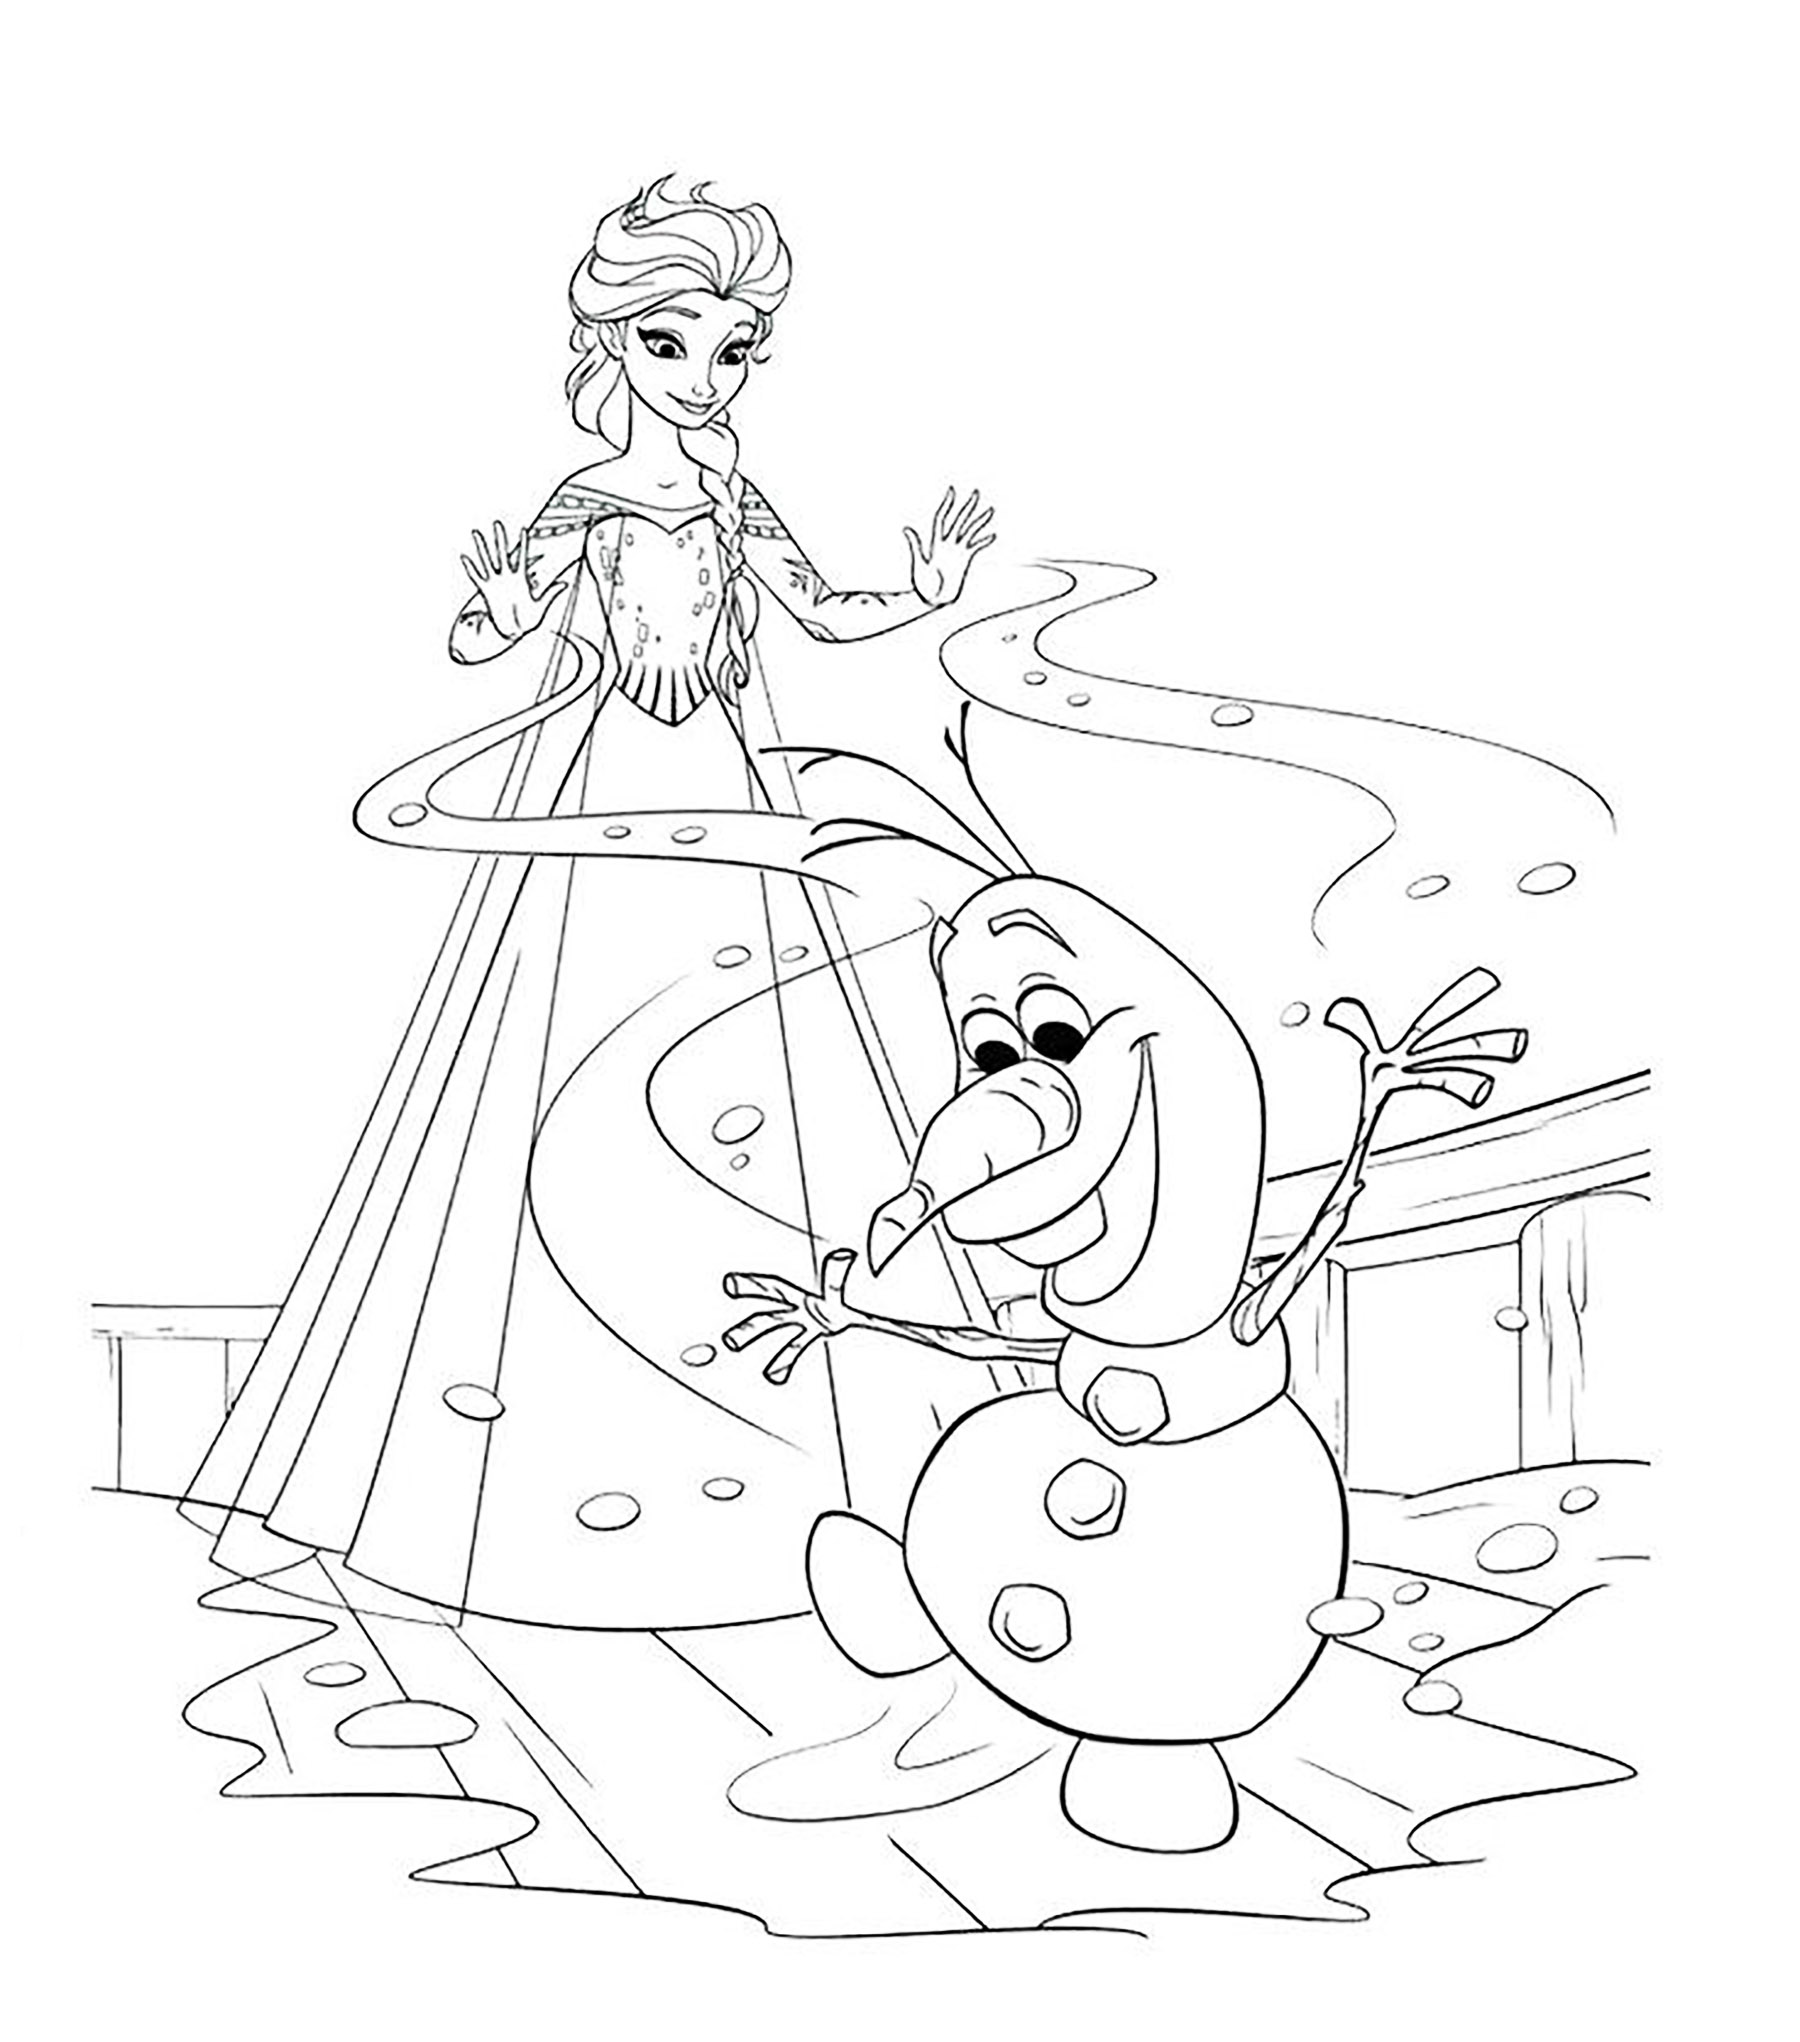 Elsa et Olaf réunis